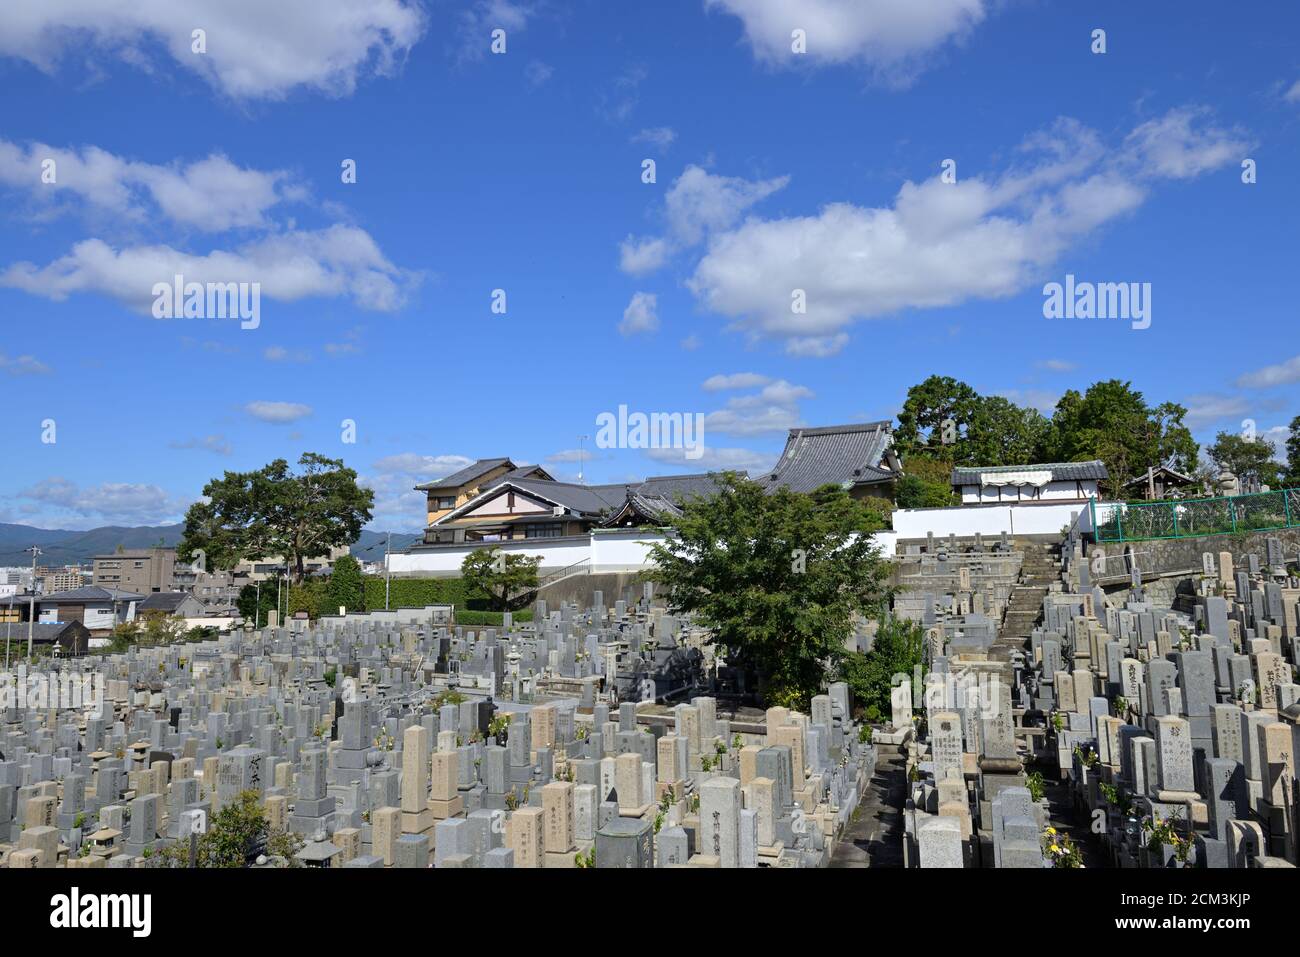 The Jippoji Temple and Toribeno surrounding cemetery, Kyoto Higashiyama JP Stock Photo